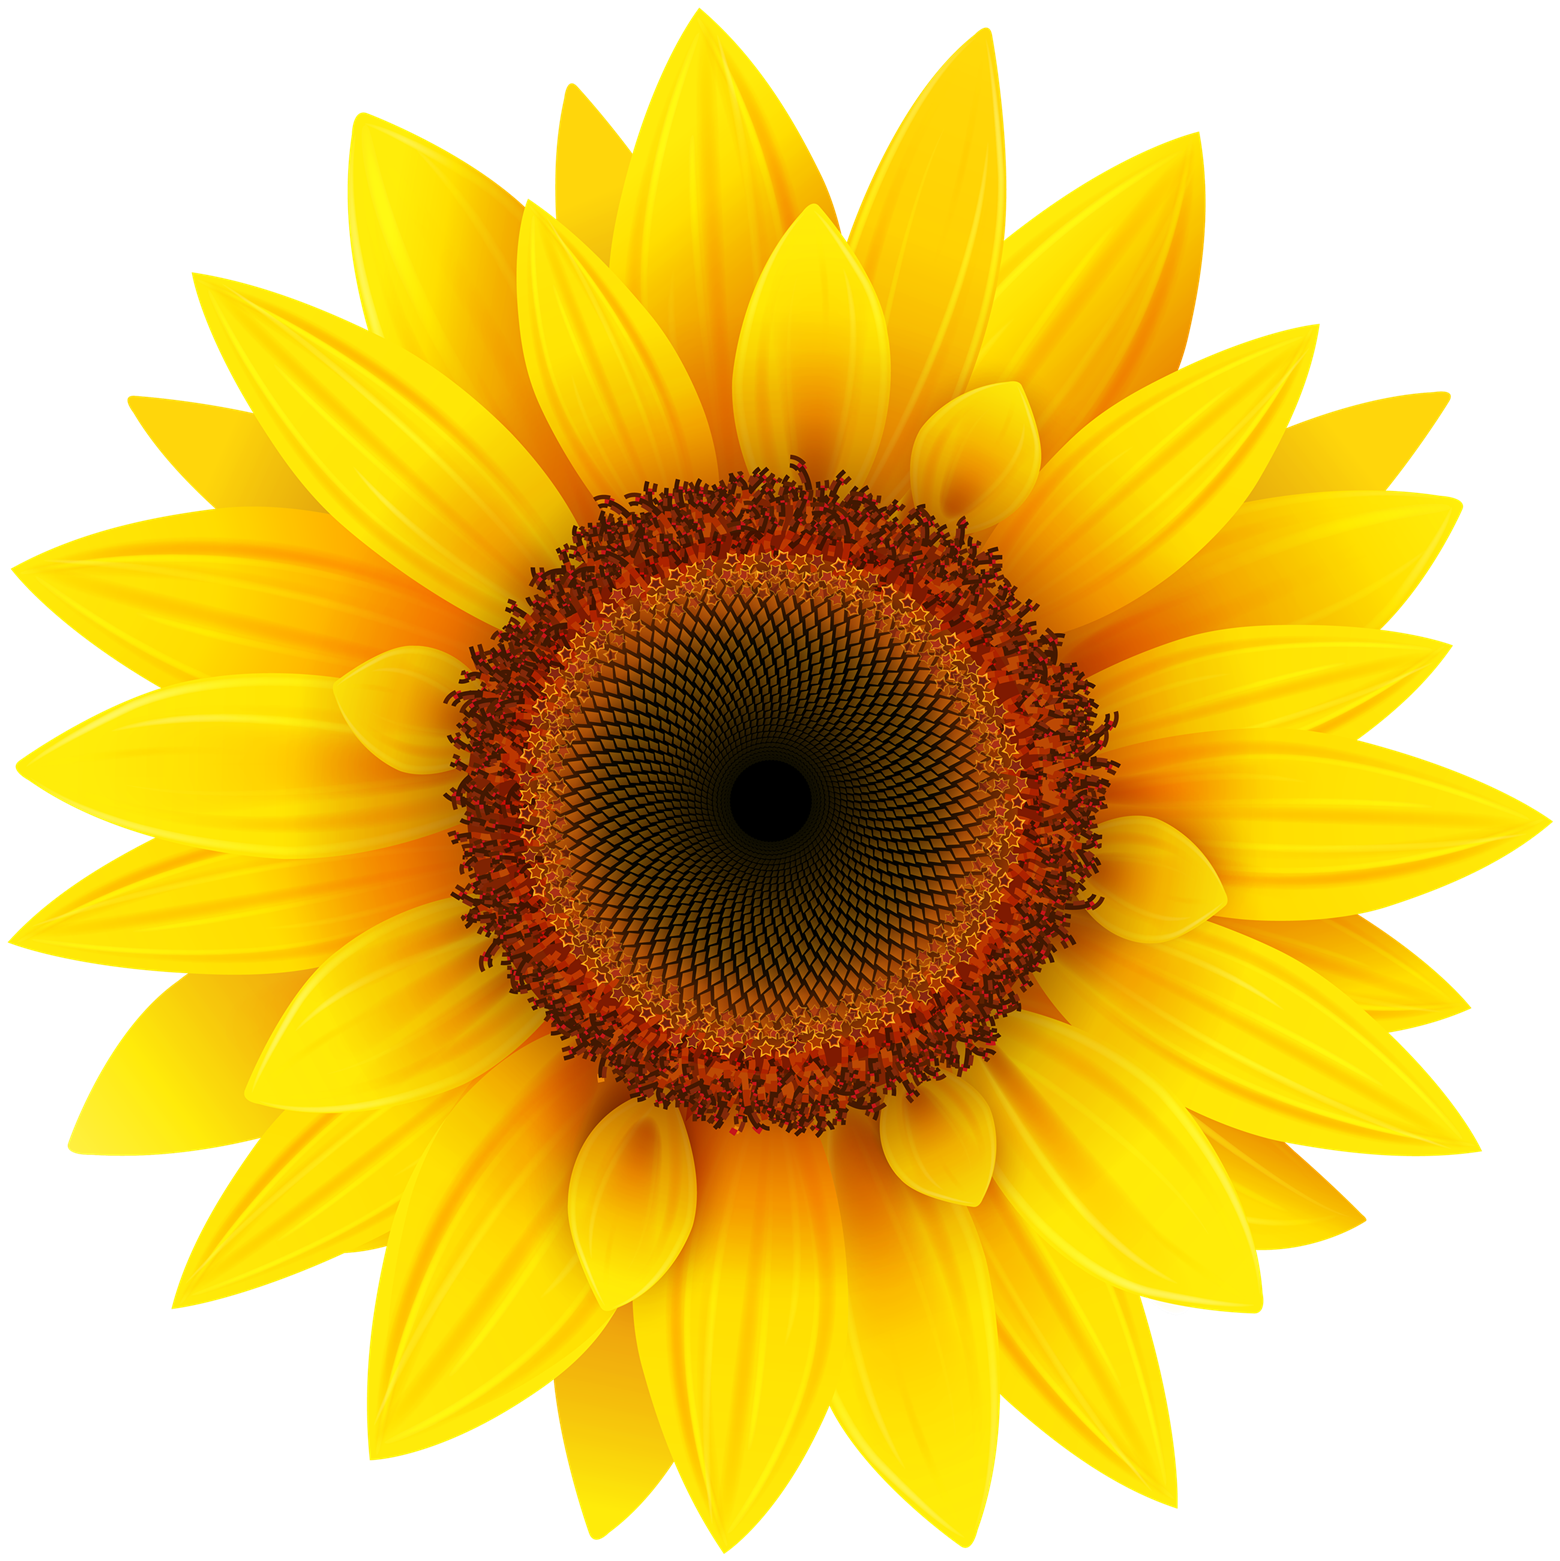 Sunflower Transparent Image PNG Image